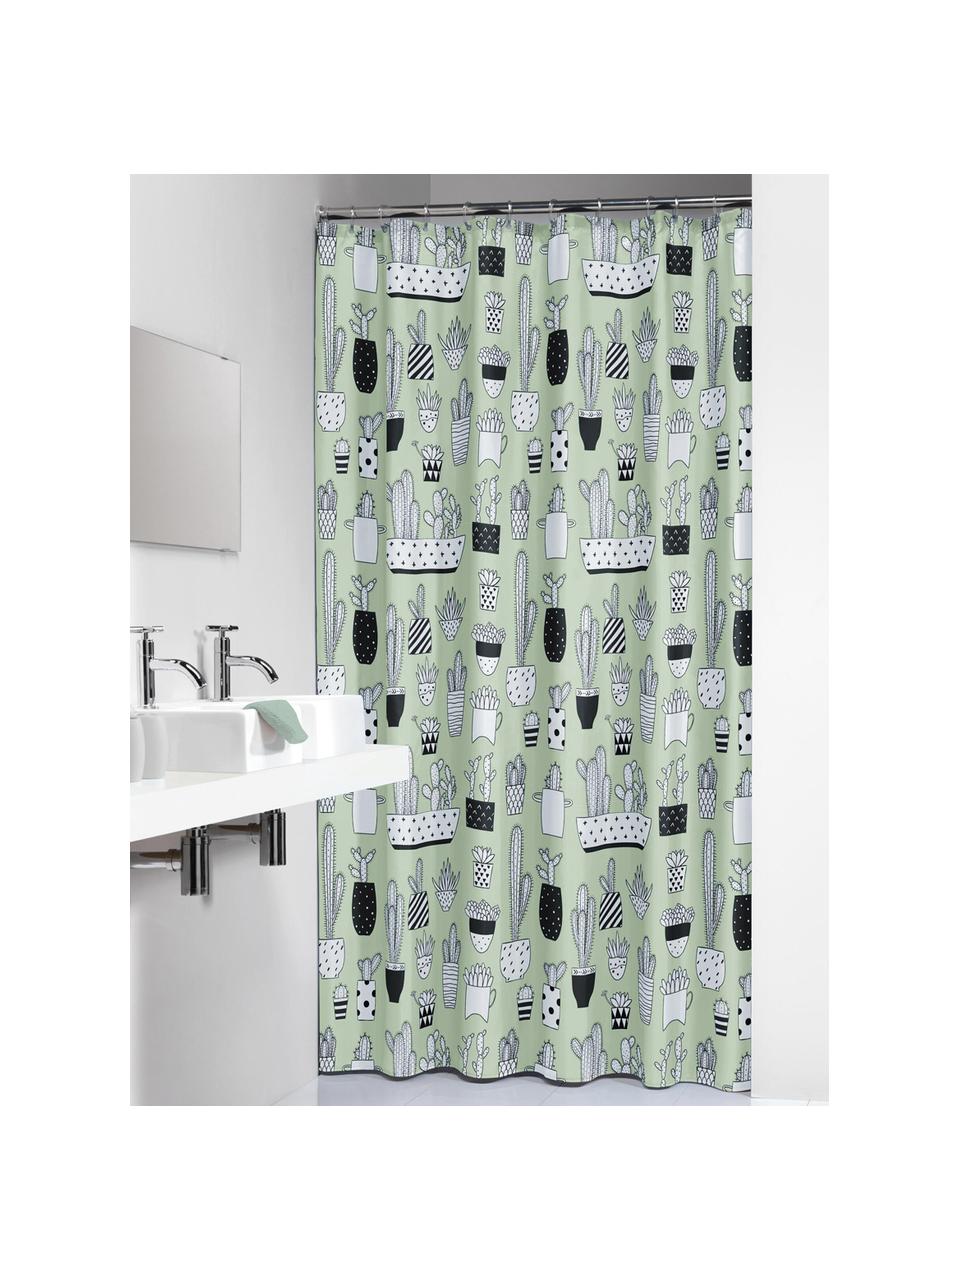 Tenda da doccia con stampa Cactus, Materiale sintetico (PEVA), impermeabile, Verde, nero, bianco, Larg. 180 x Lung. 200 cm